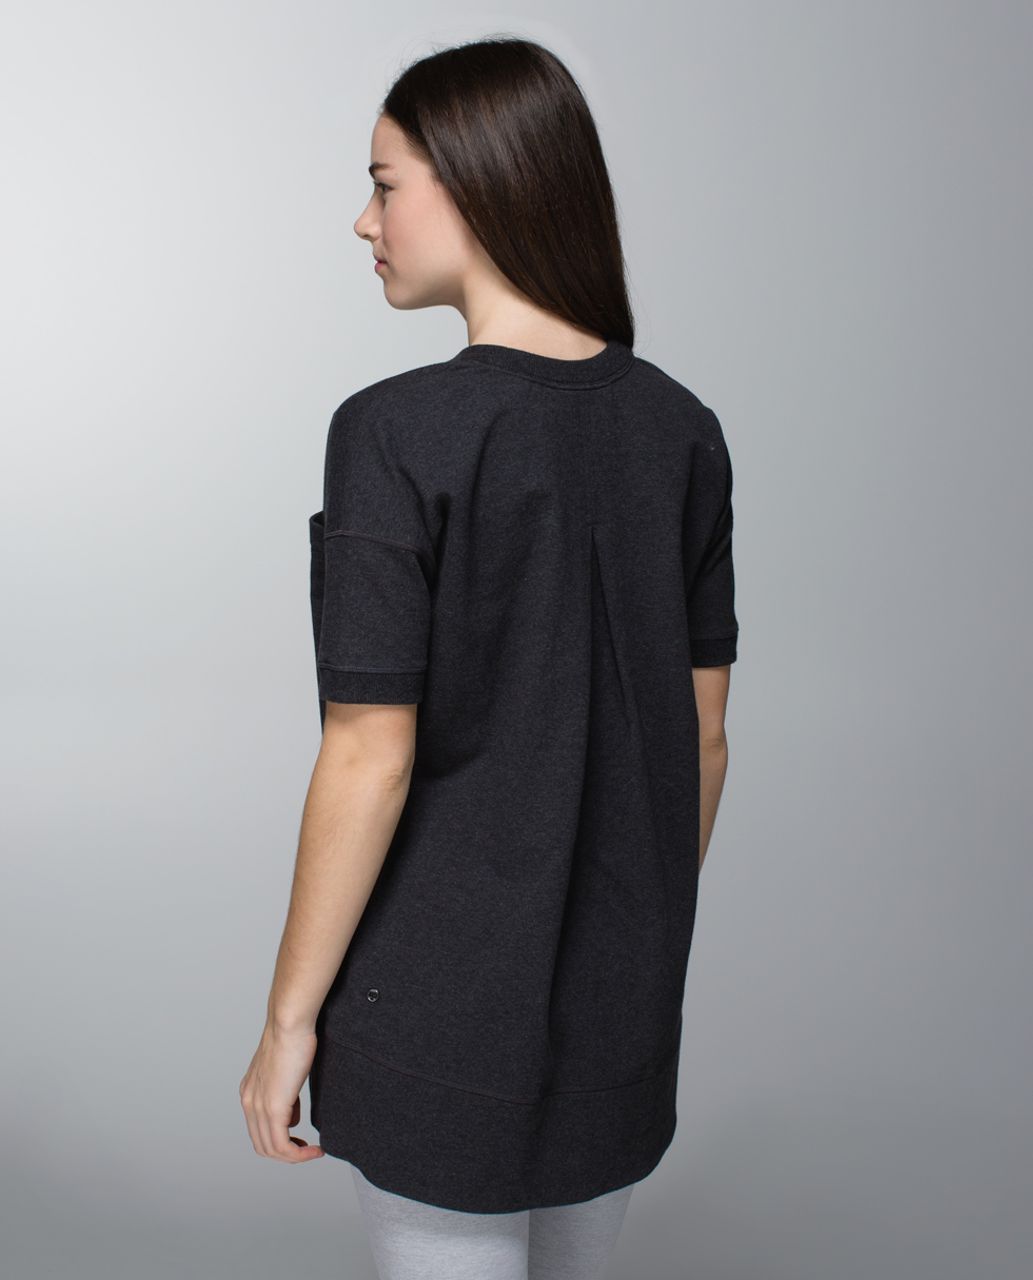 Lululemon Mudra Short Sleeve Sweatshirt Dark Gray Women's Size 6